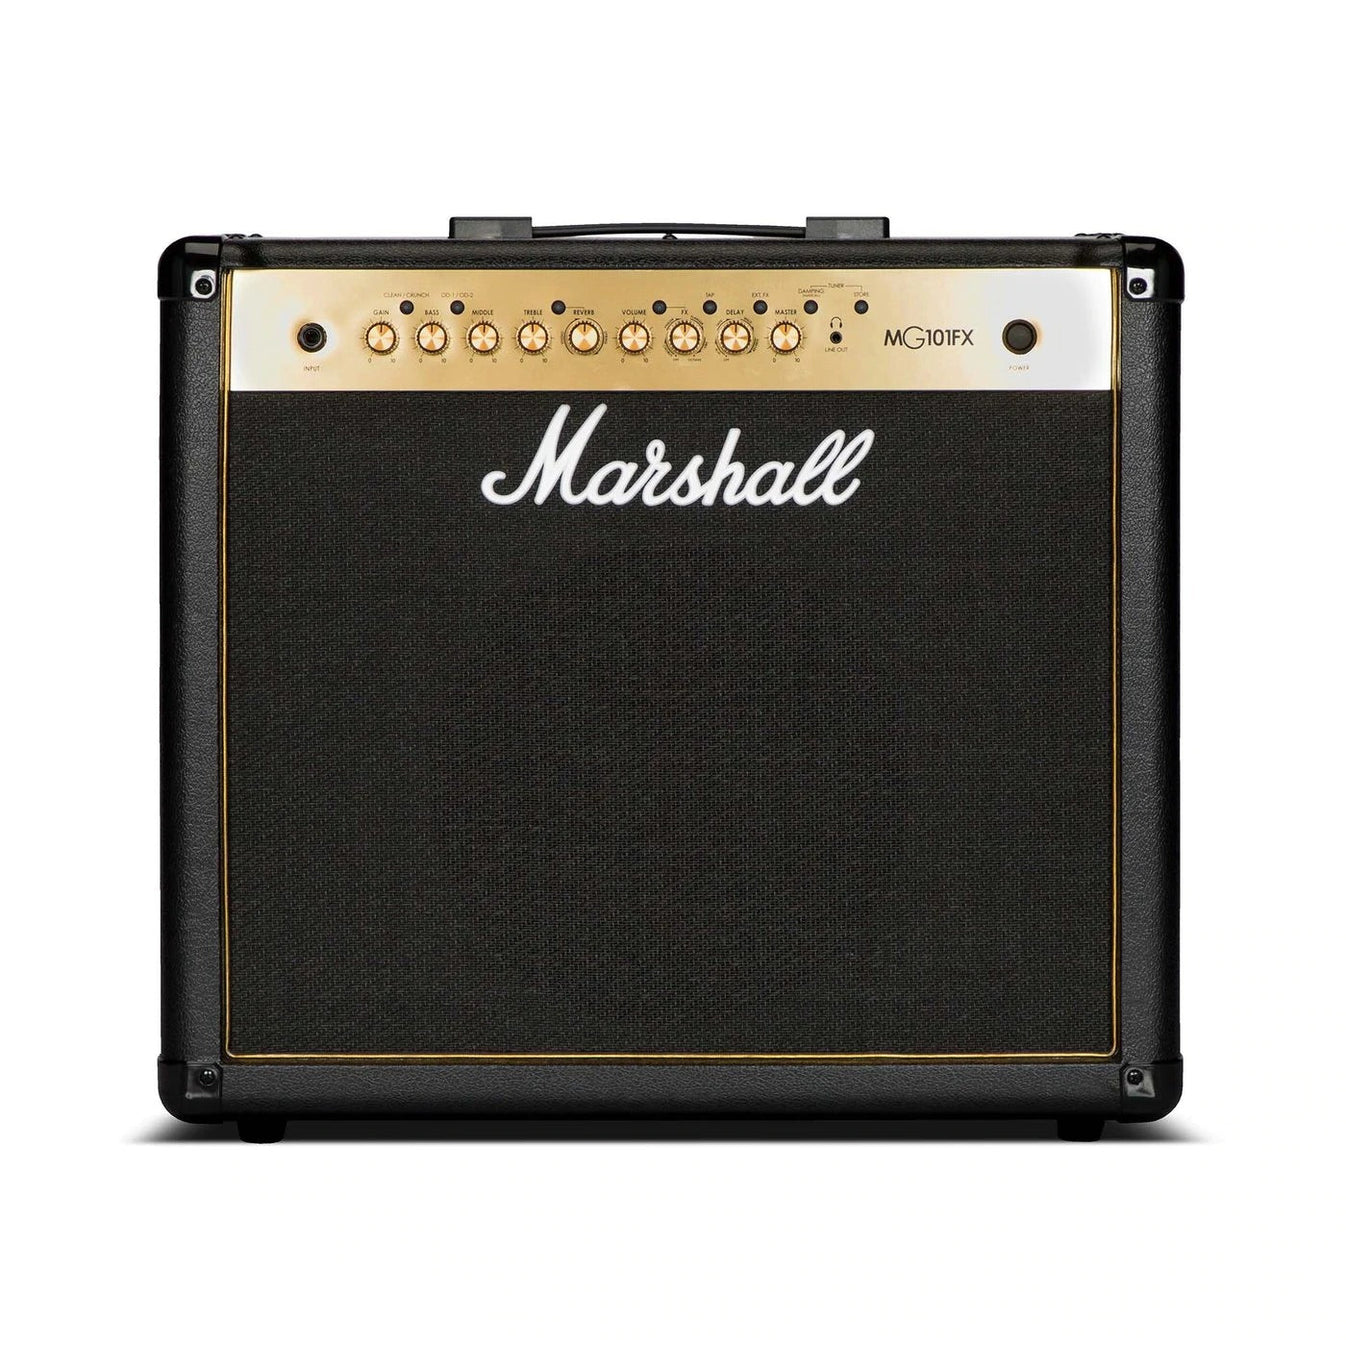 Amplifier Guitar Marshall MG101FX 100W-Mai Nguyên Music